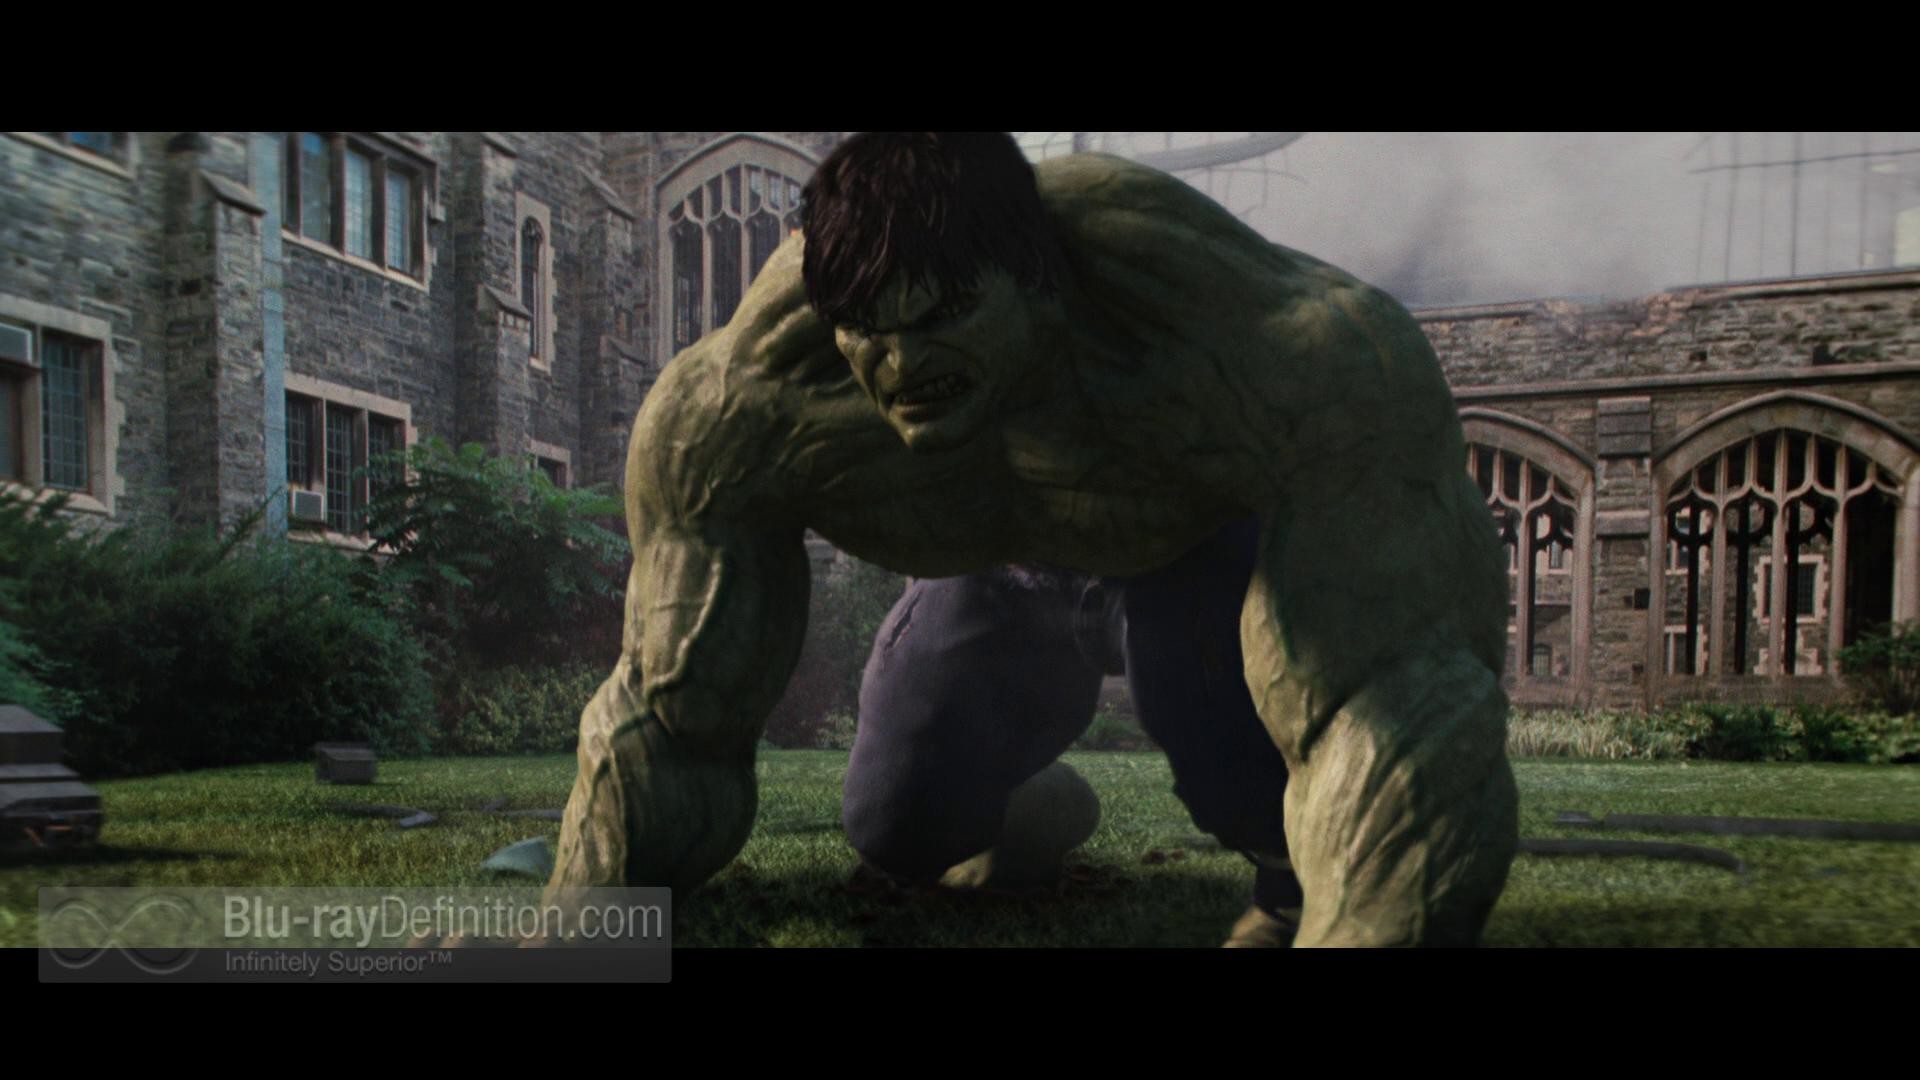 1920x1080 Incredible Hulk Movie Wallpaper Hd - image #779169